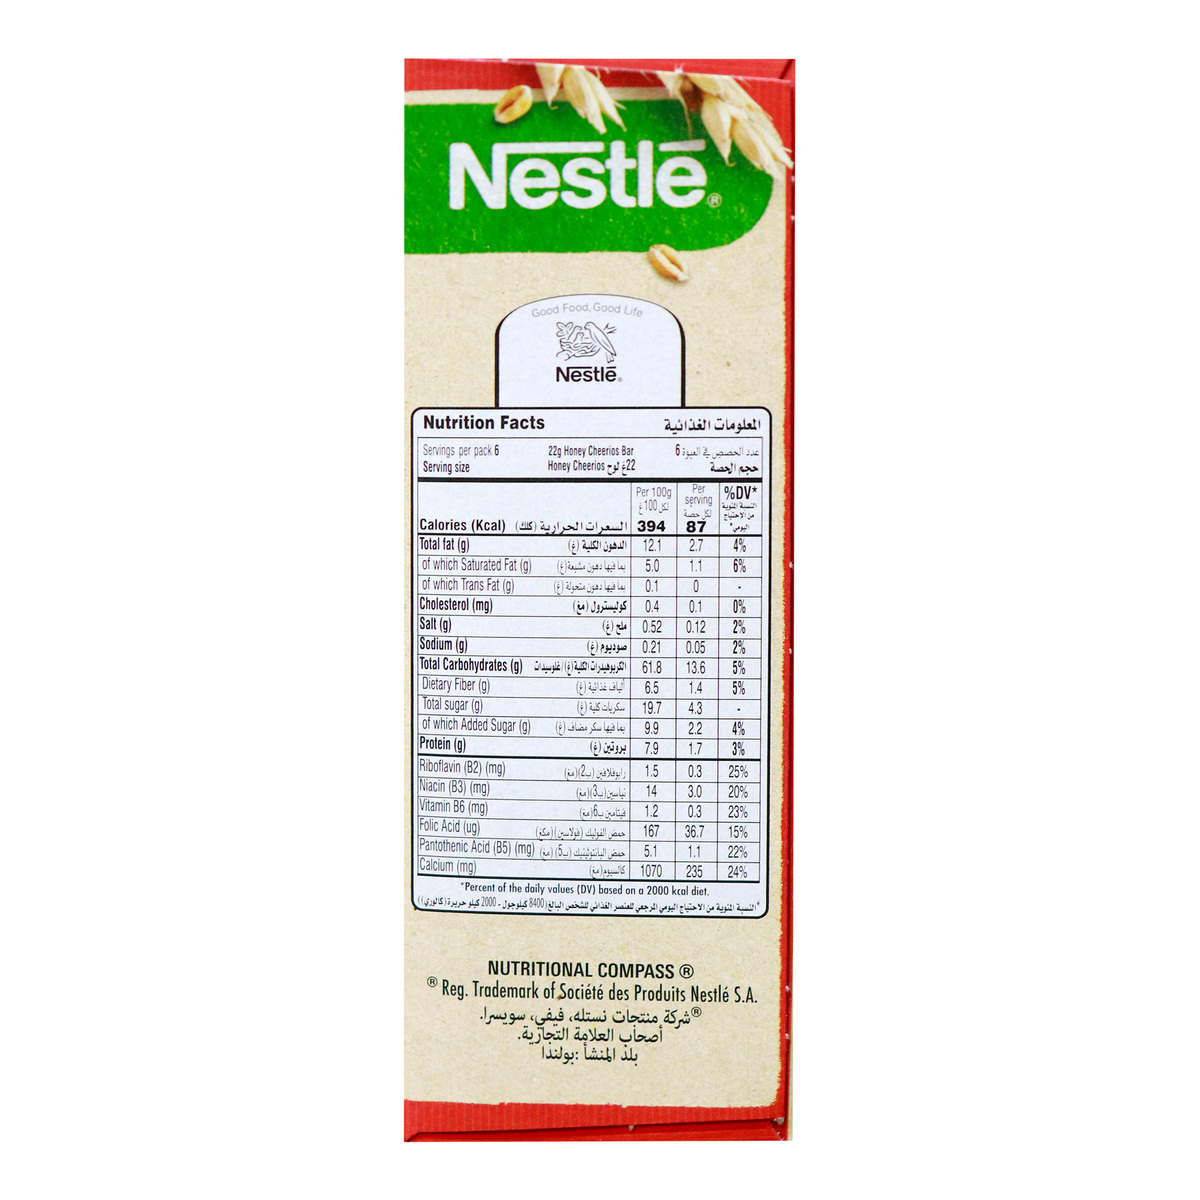 Nestle Cheerios Honey Cereal Bar 22 g 5+1